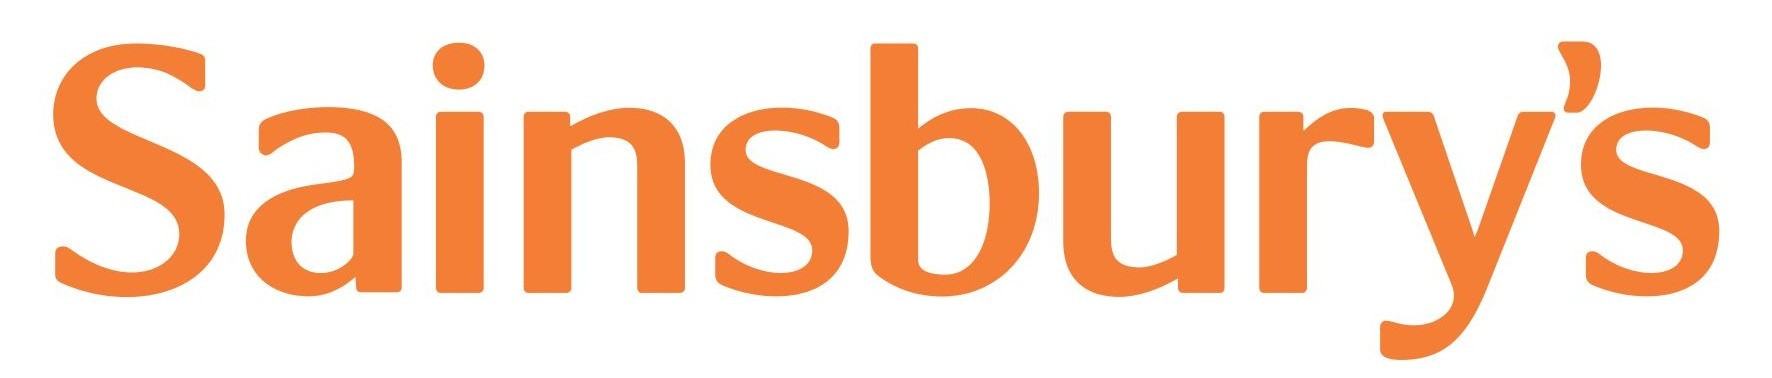 sainsbury s logo